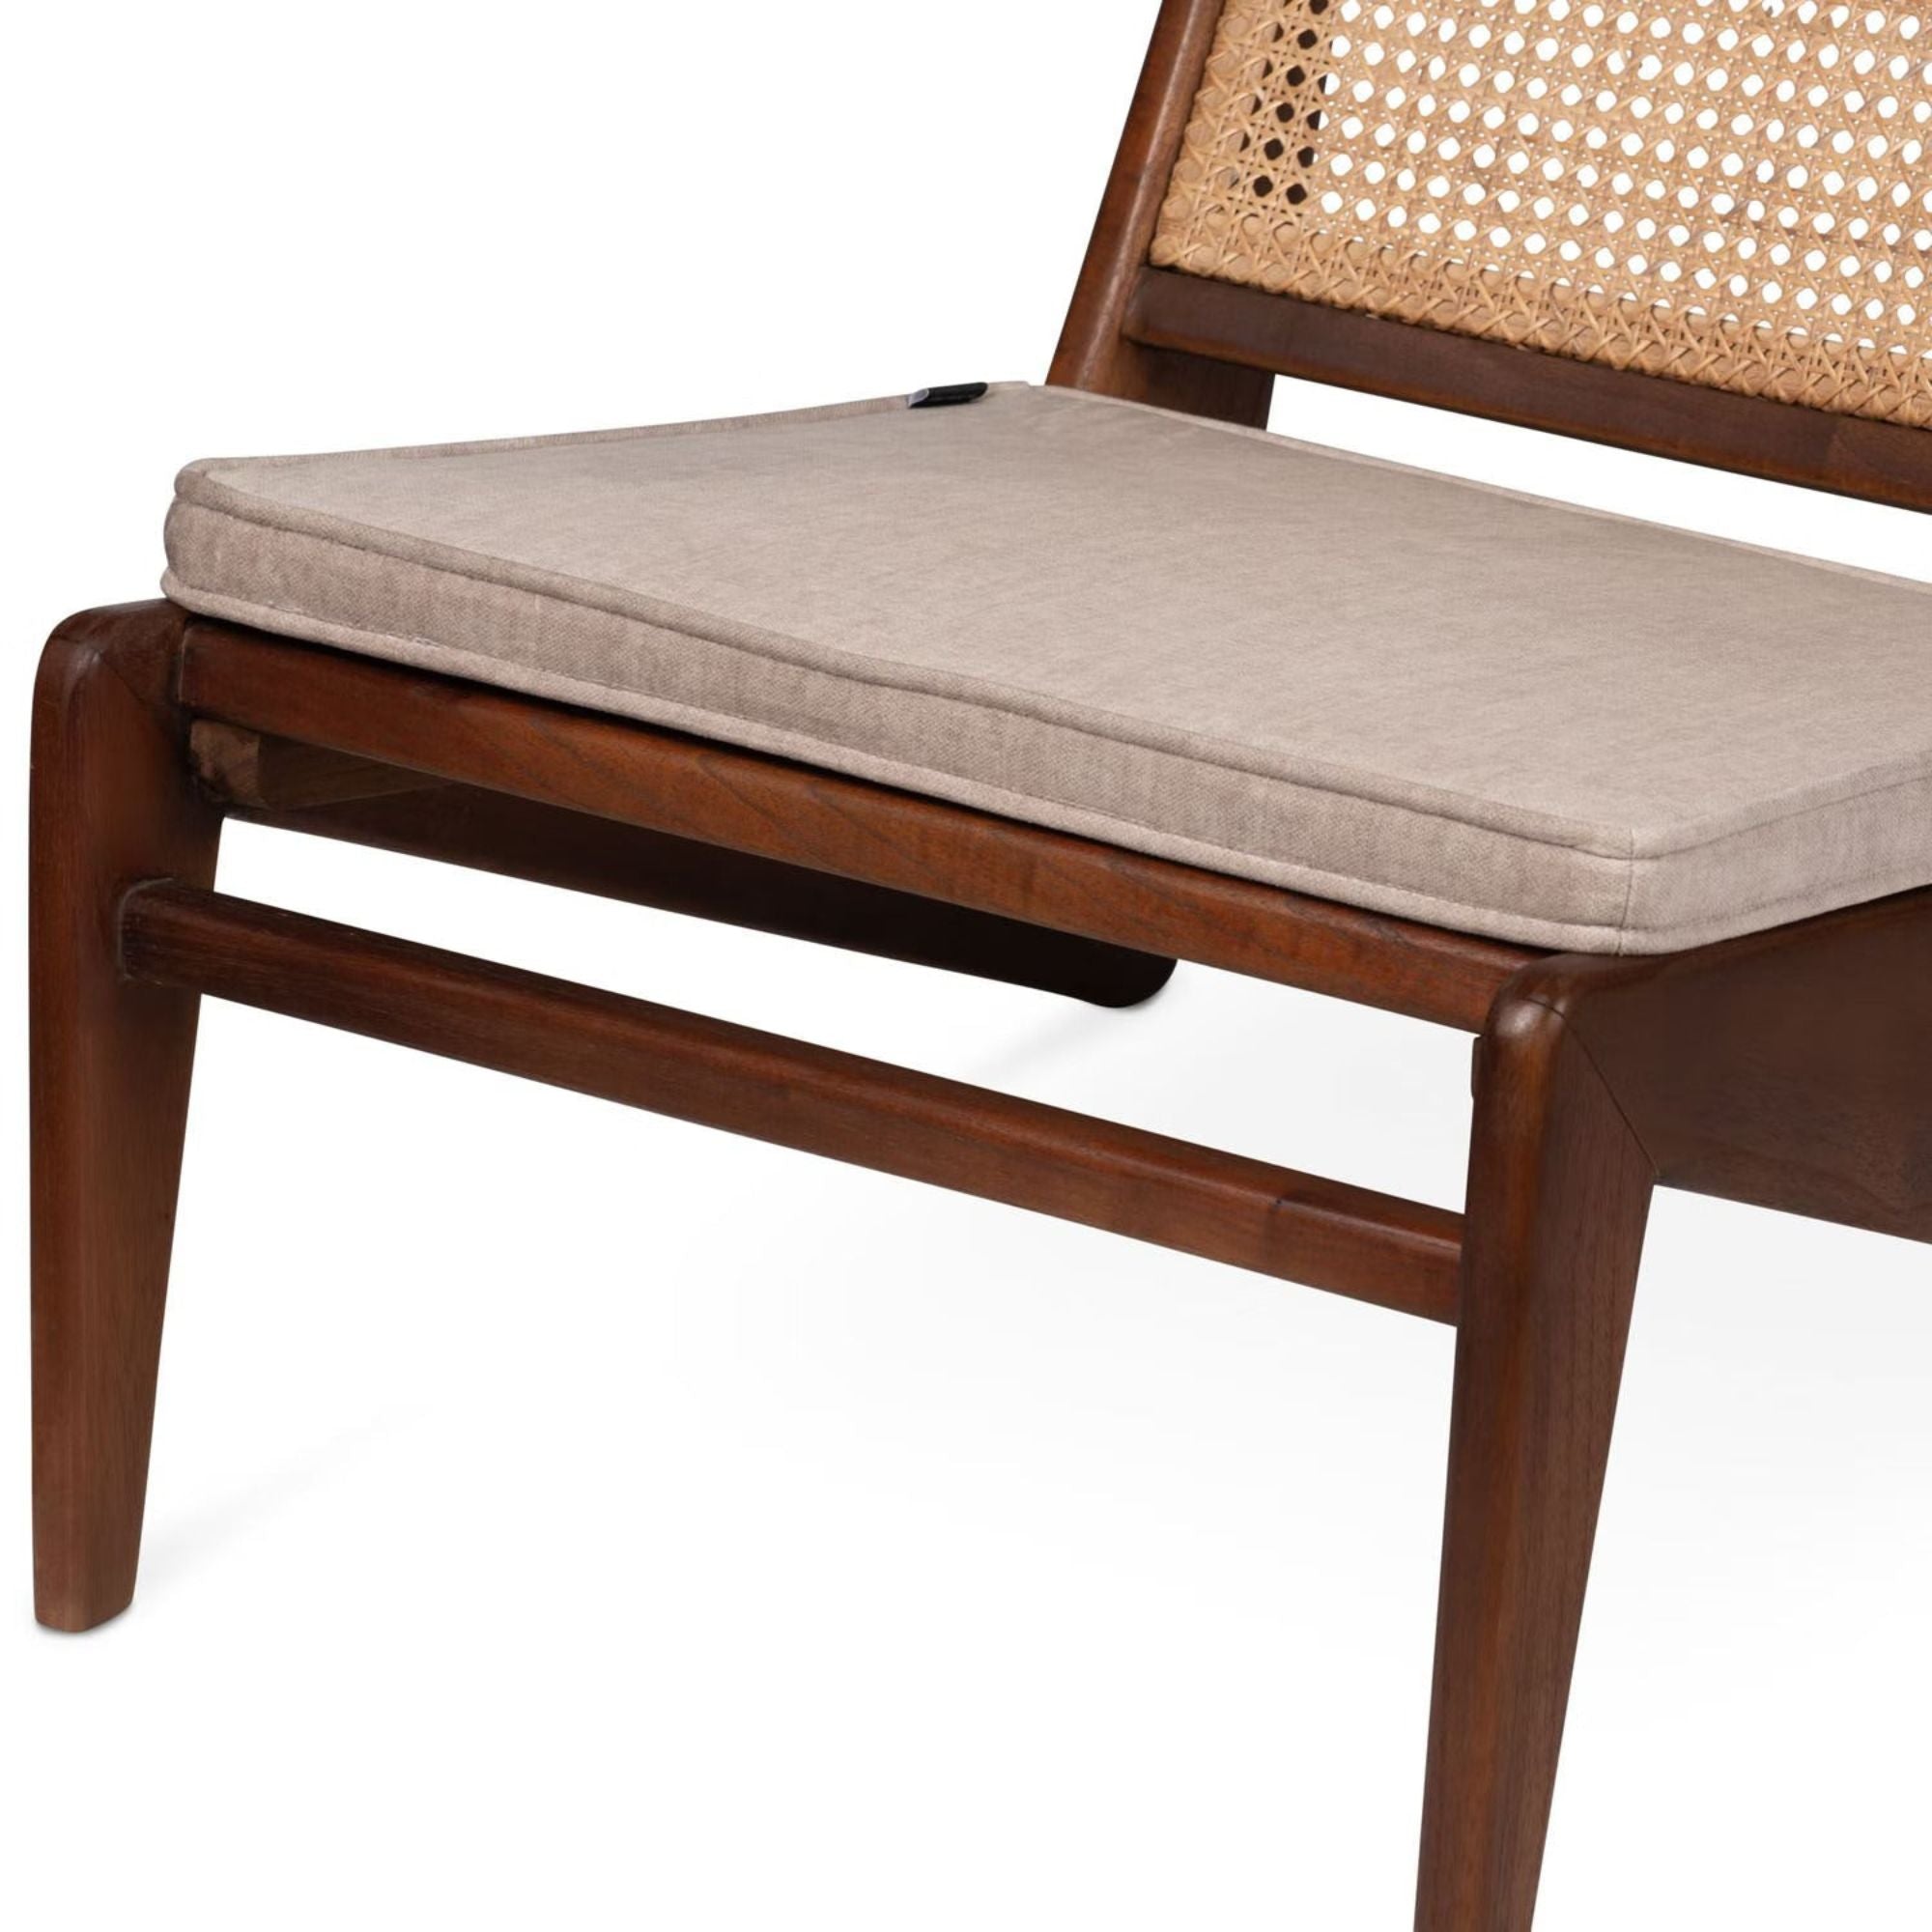 Cushion for Kangaroo Chair